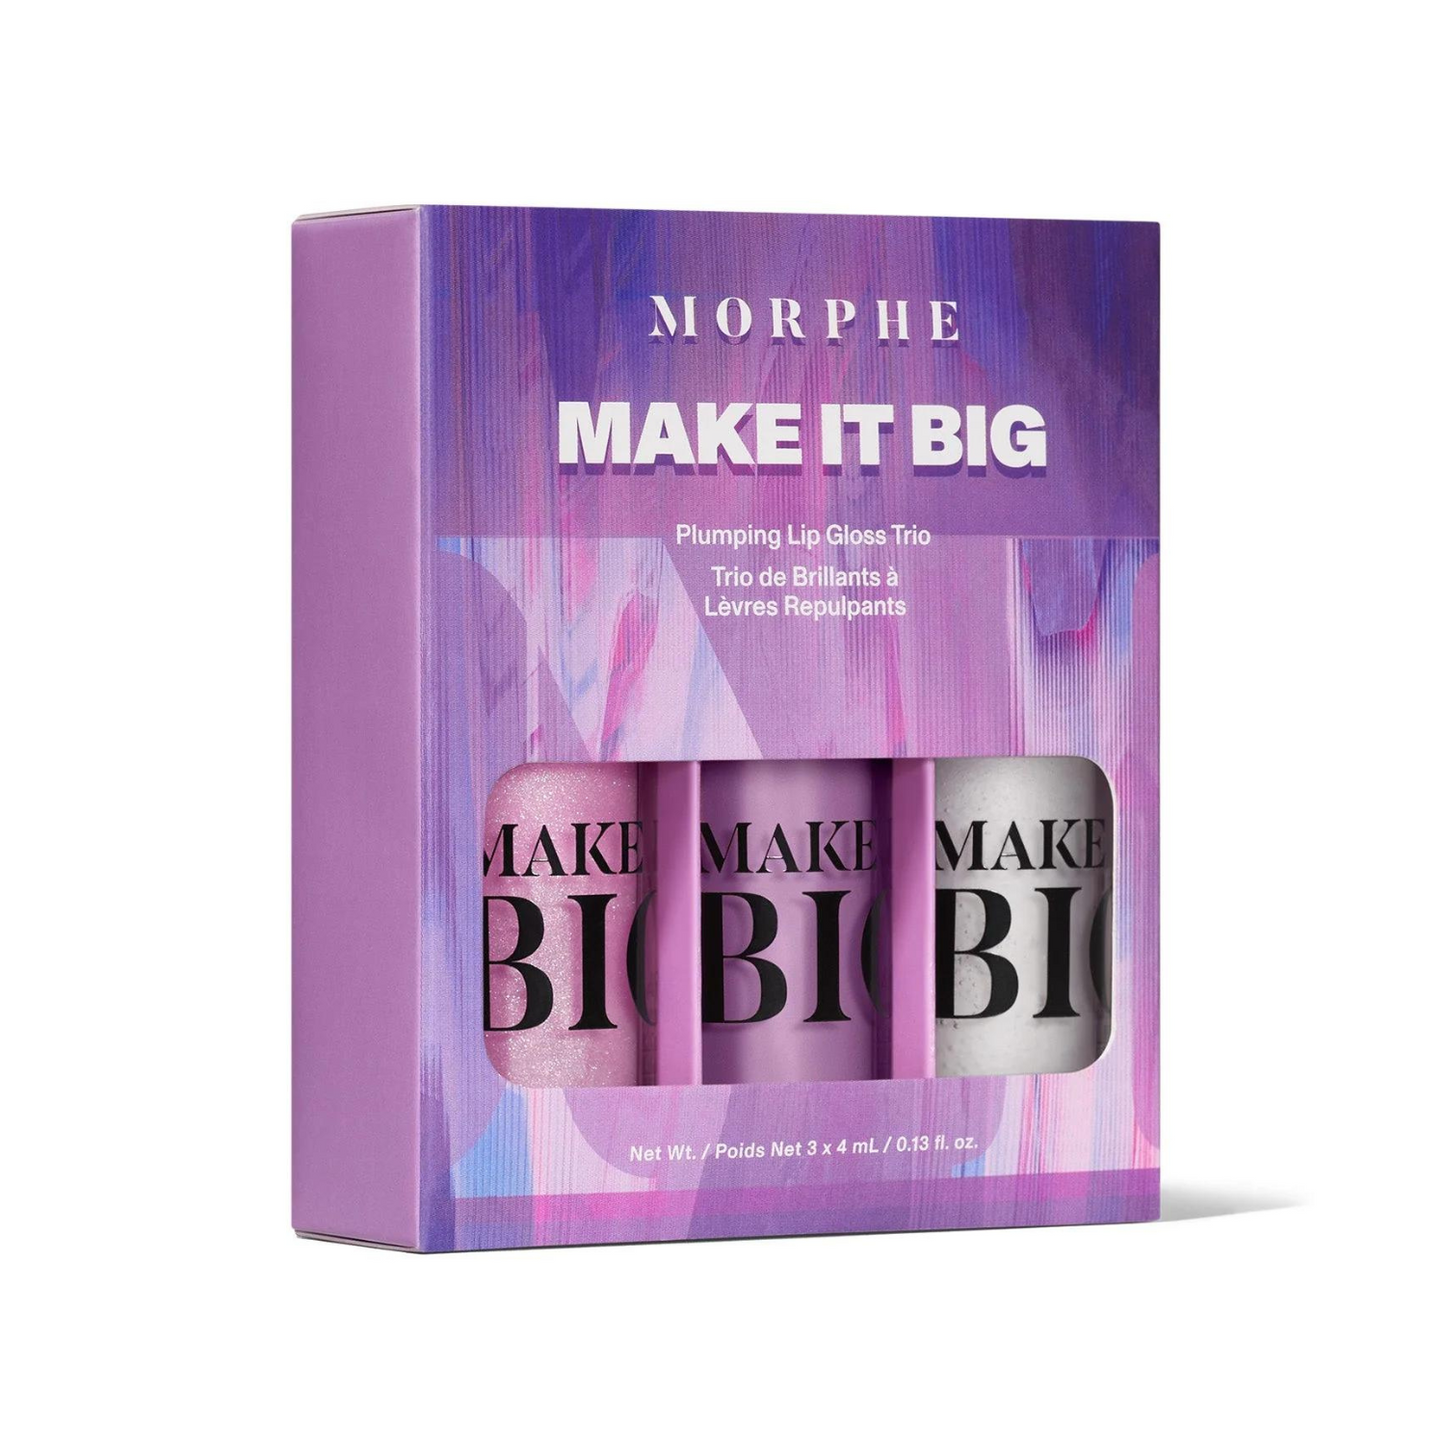 Morphe - Ultralavender Make It Big Plumping Lip Gloss Trio